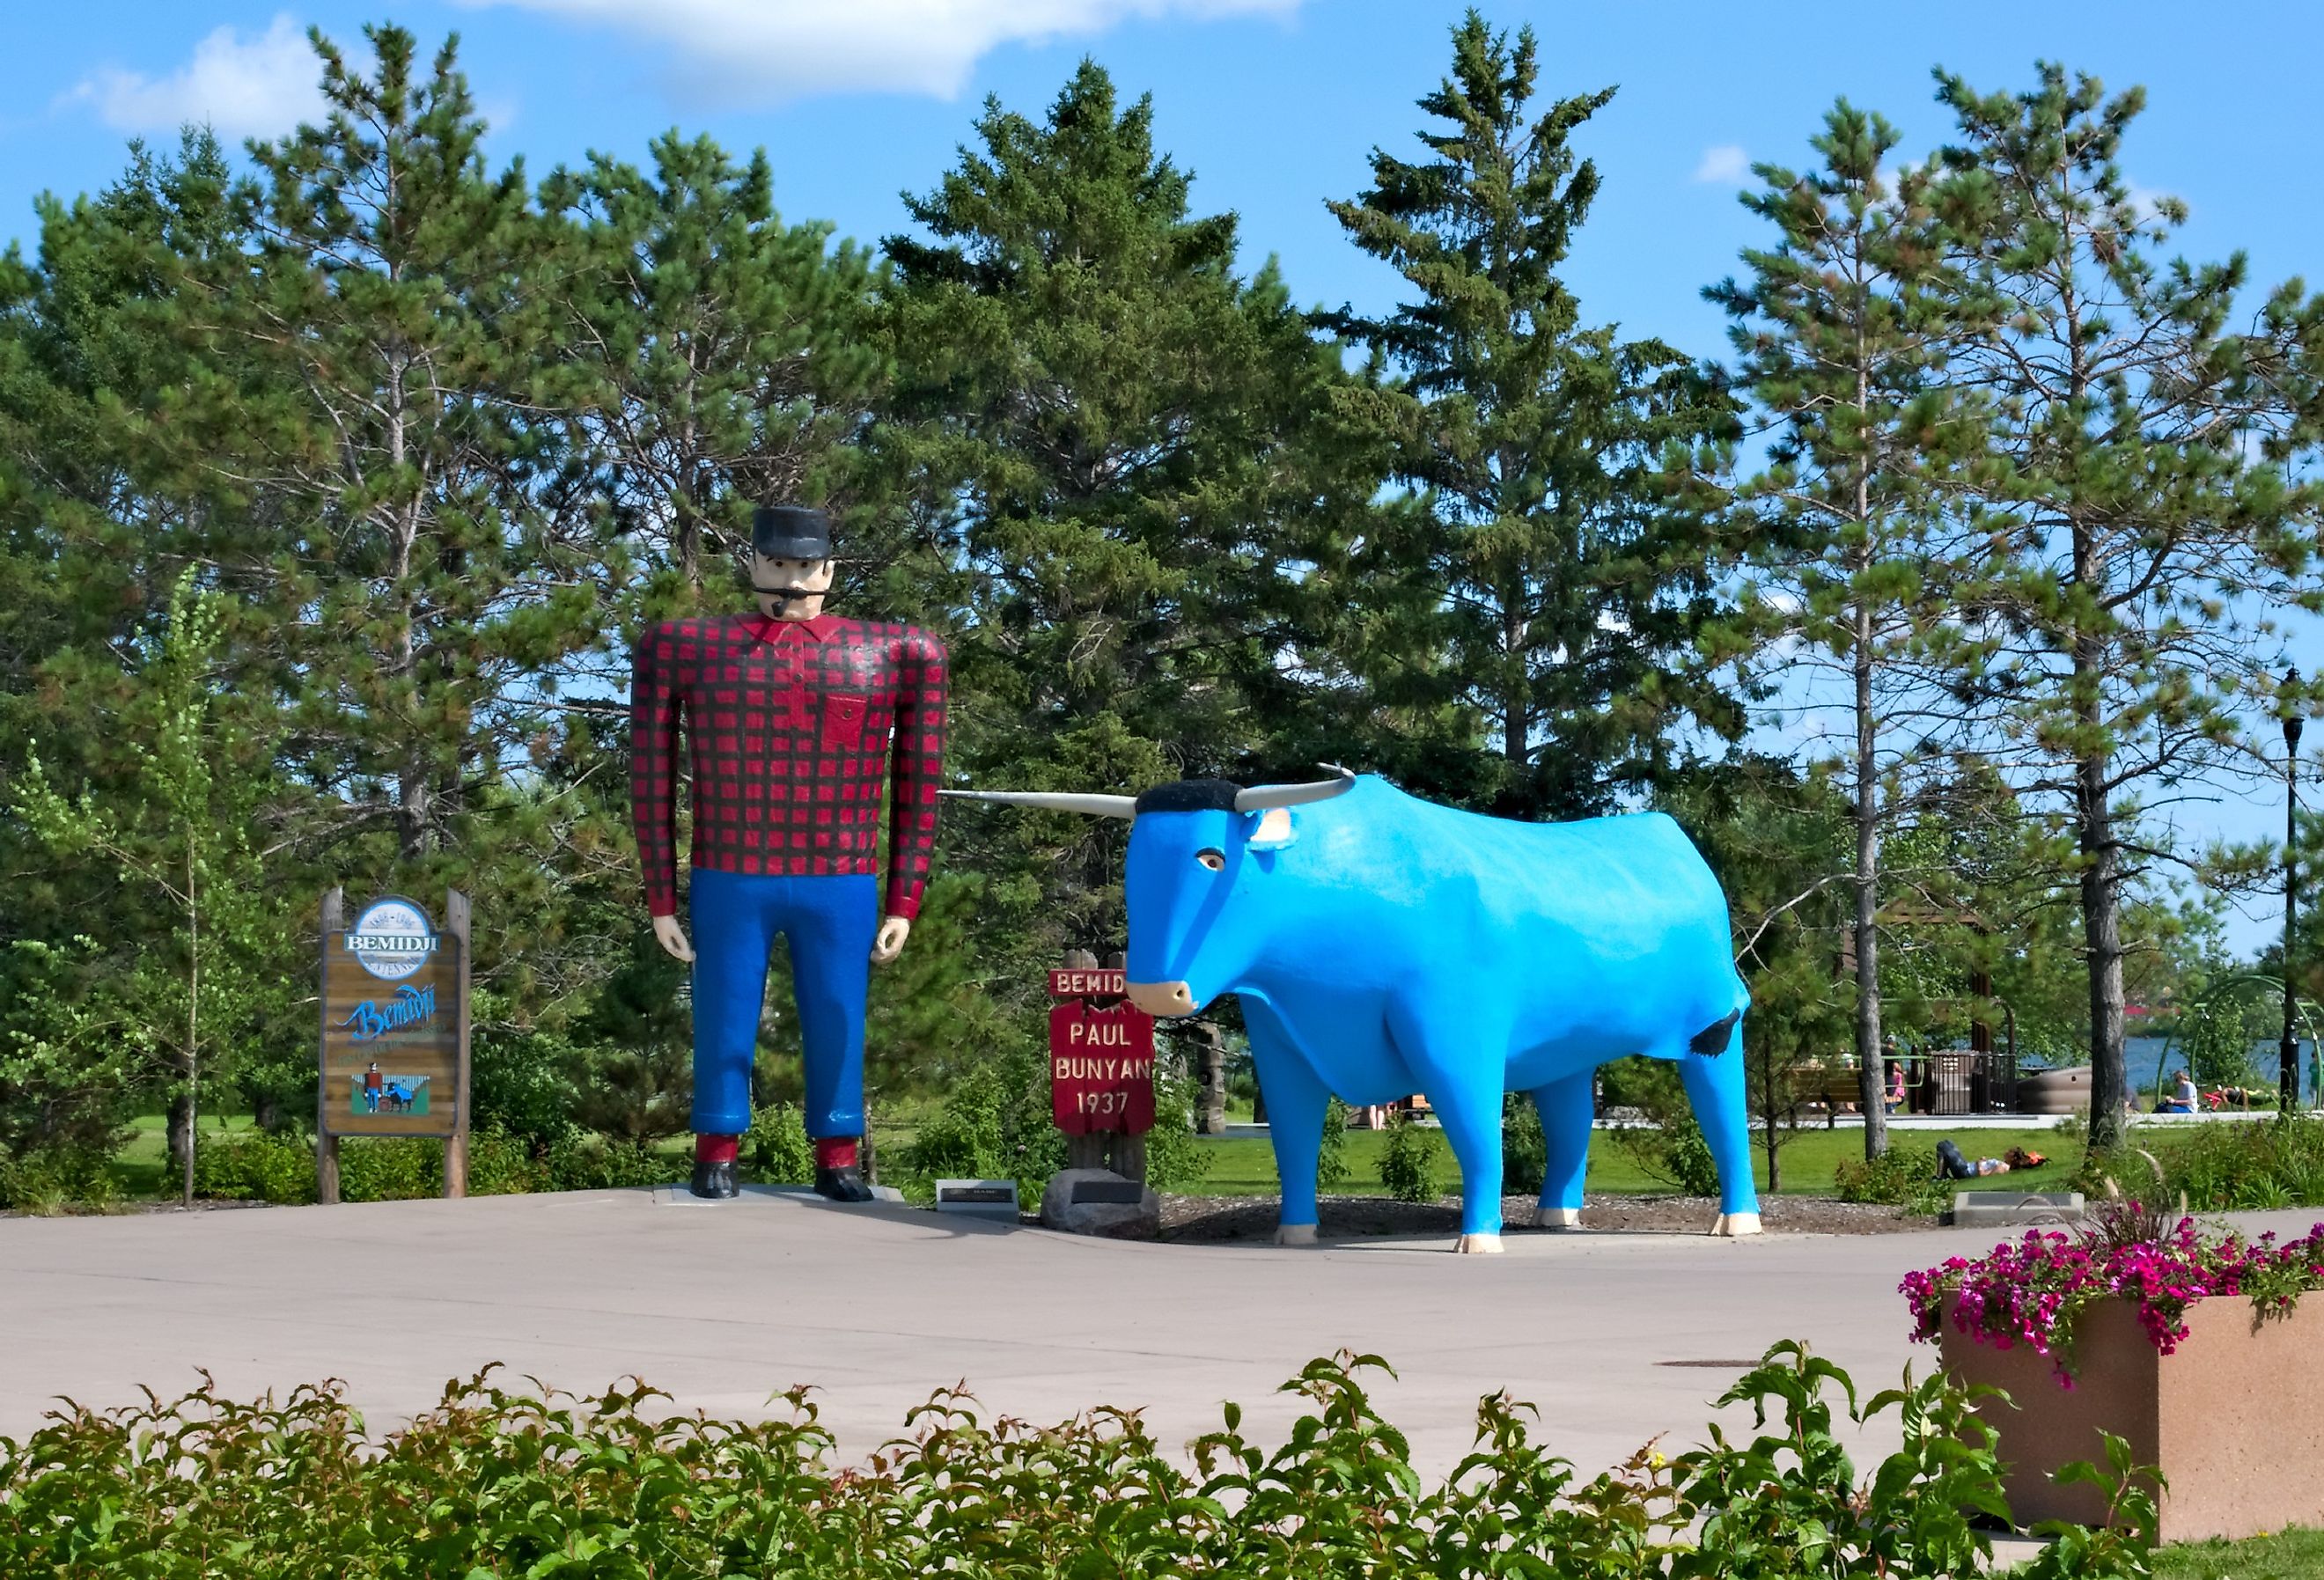 Paul Bunyan and Babe the Blue Ox, are popular roadside attraction statues of the legendary lumberjack and his sidekick in Bemidji, Minnesota. Image credit Edgar Lee Espe via Shutterstock